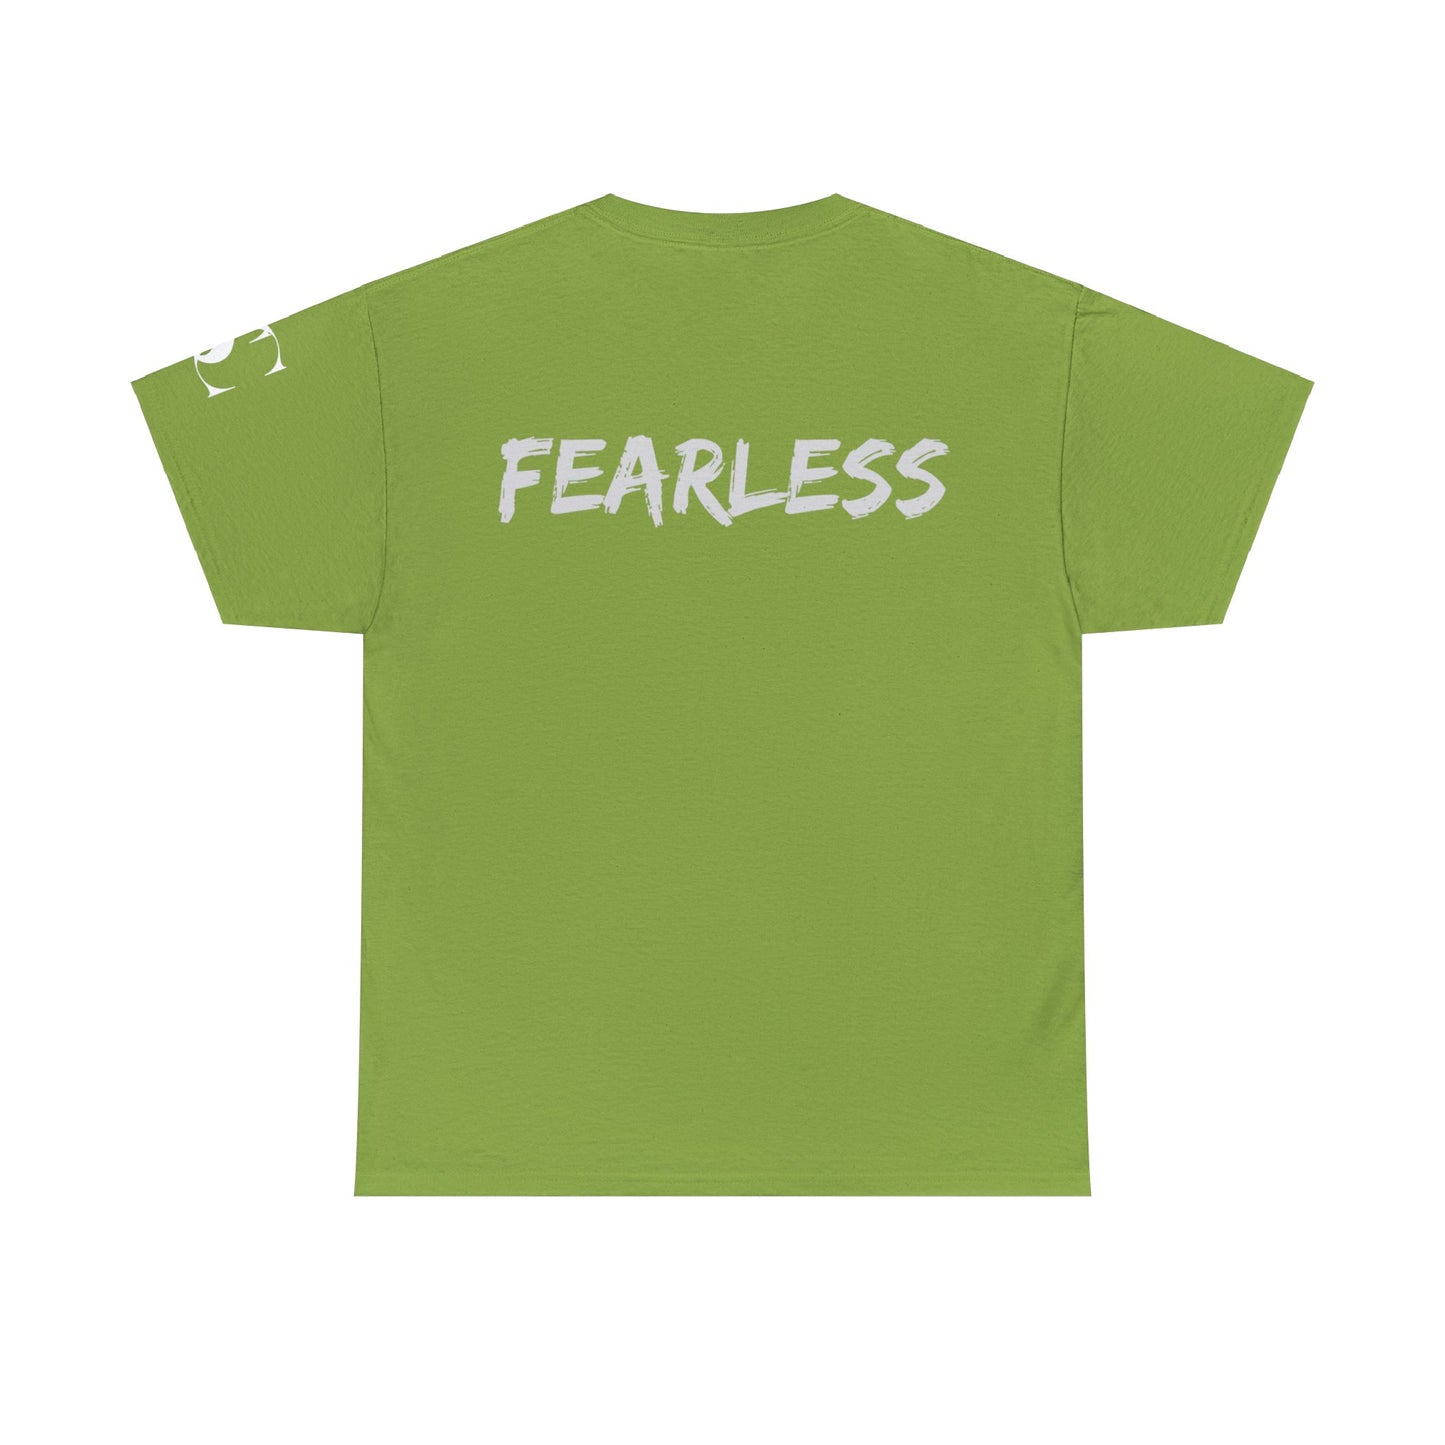 Fearless global T-shirt